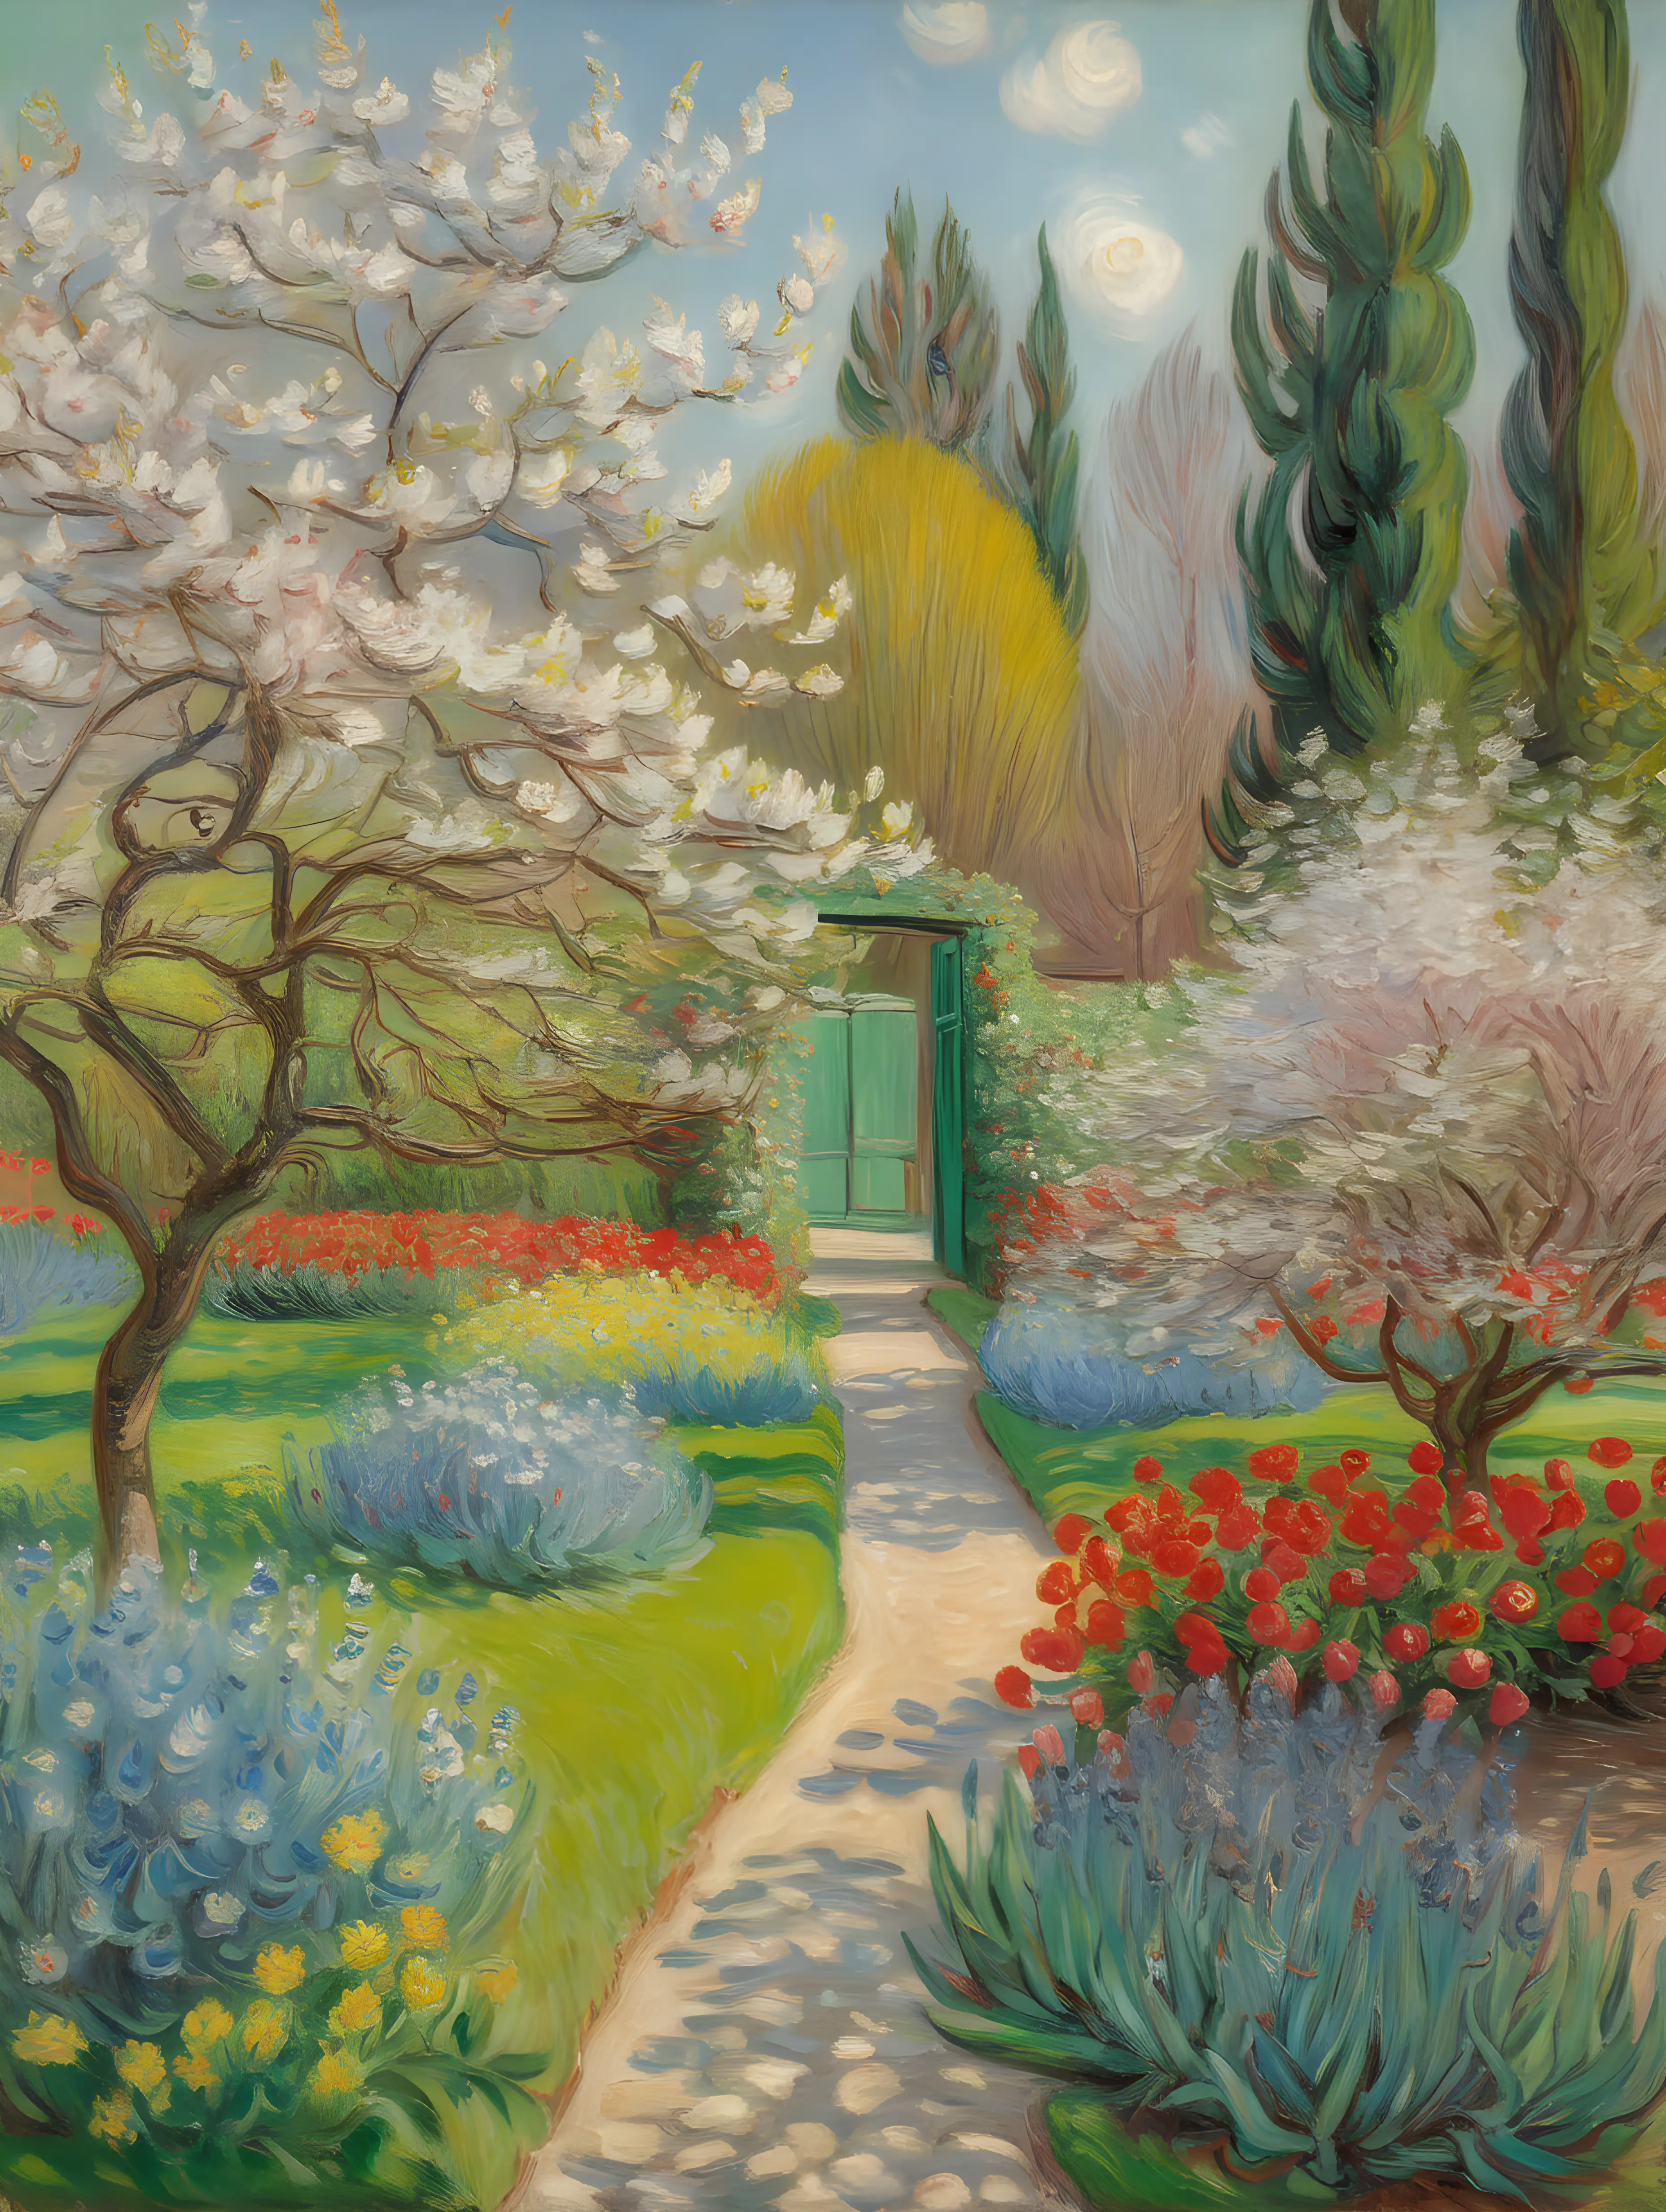 Enchanting 19thCentury European Garden Monet and van Gogh Inspired Oil Painting